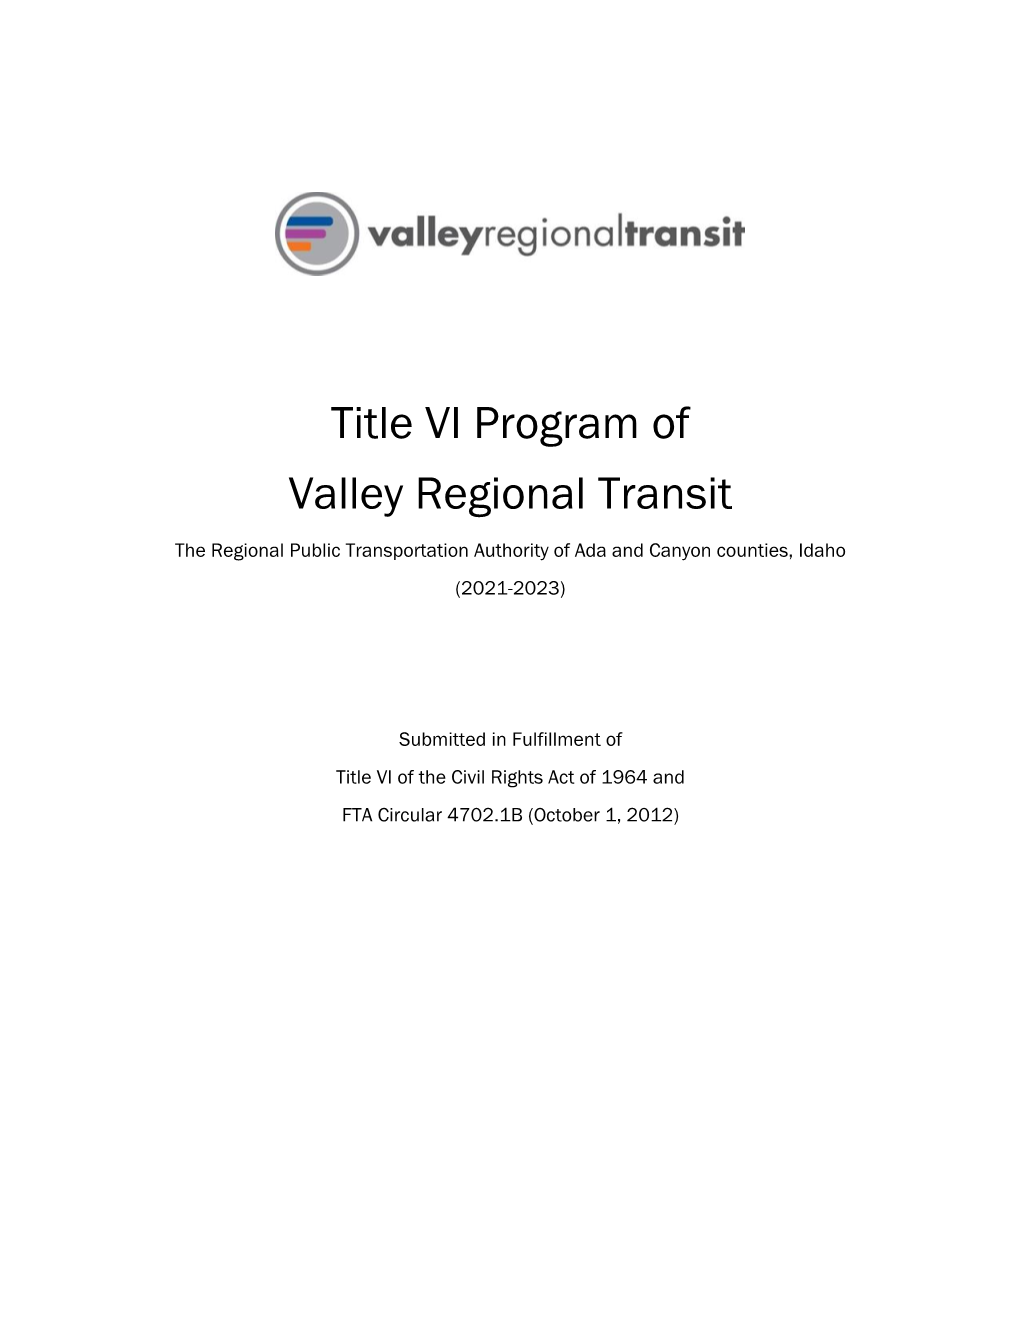 Title VI Program of Valley Regional Transit